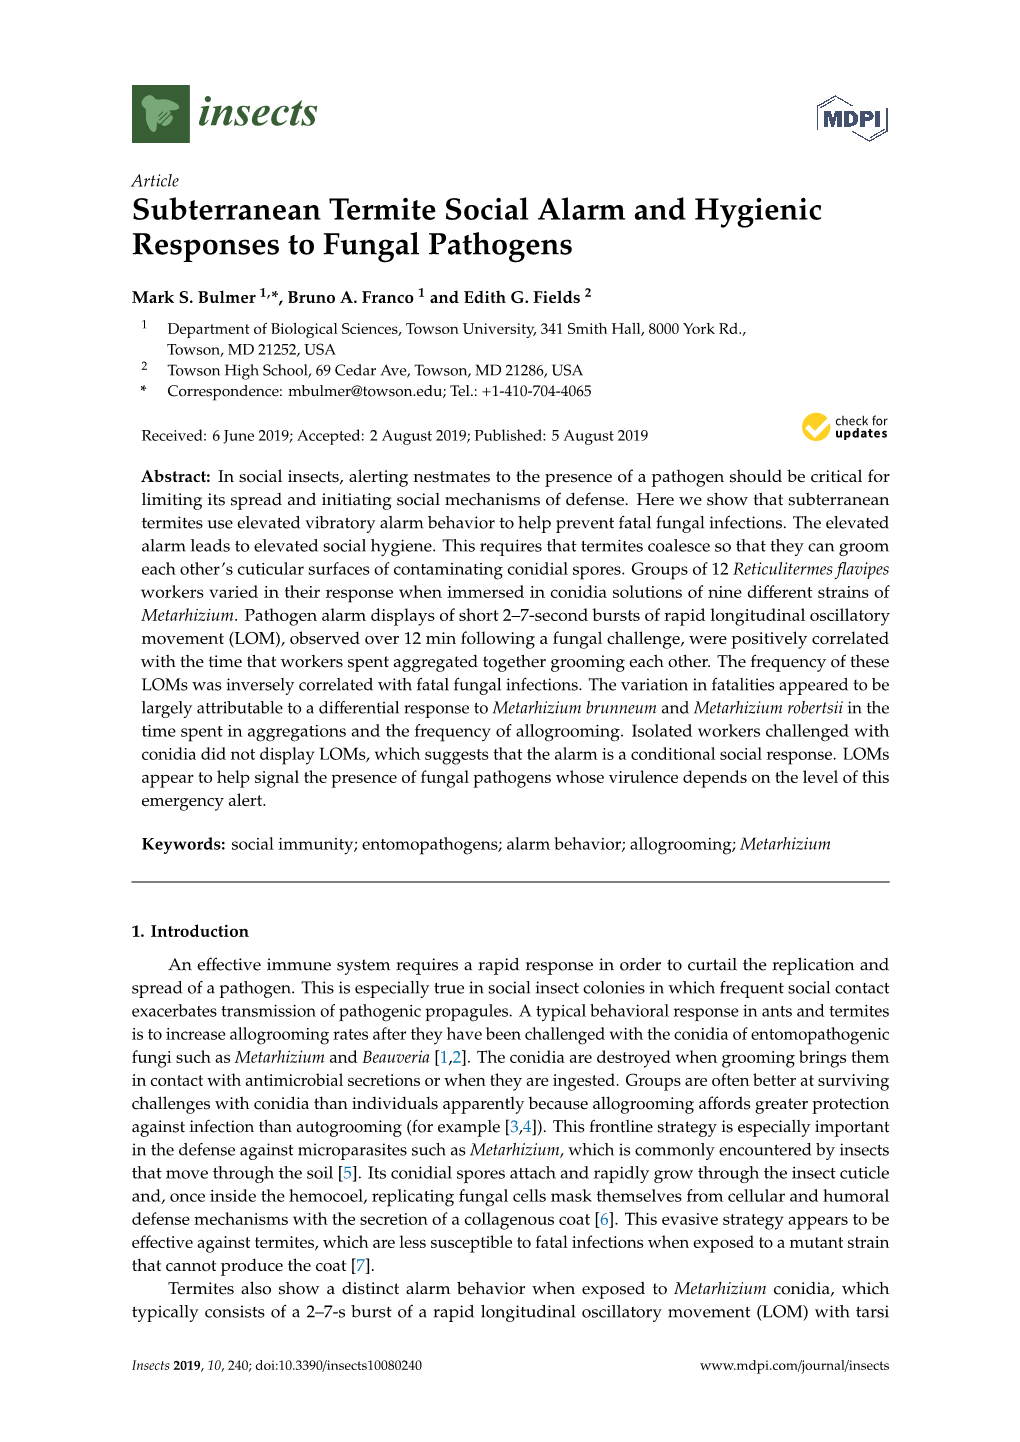 Subterranean Termite Social Alarm and Hygienic Responses to Fungal Pathogens